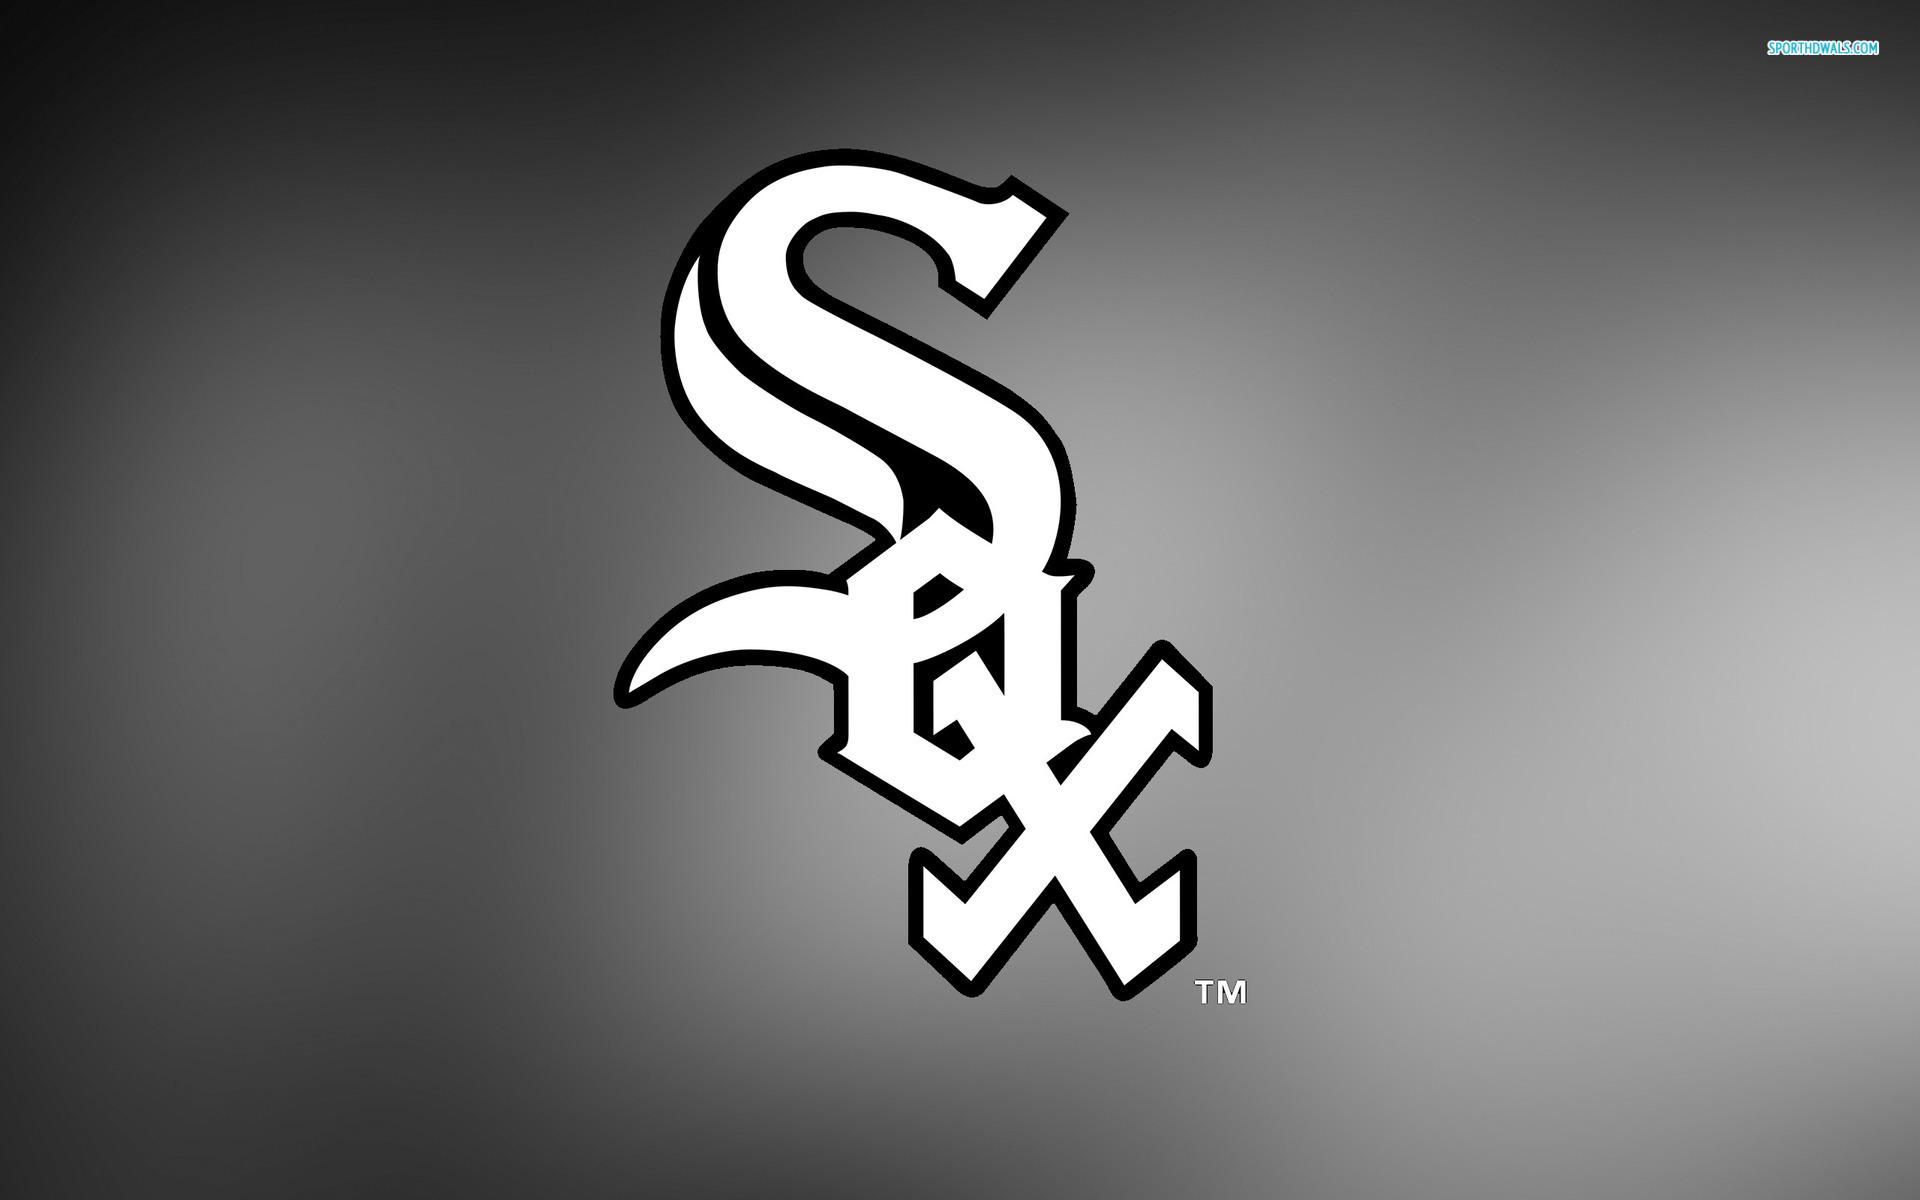 Chicago White Sox Logo Wallpaper